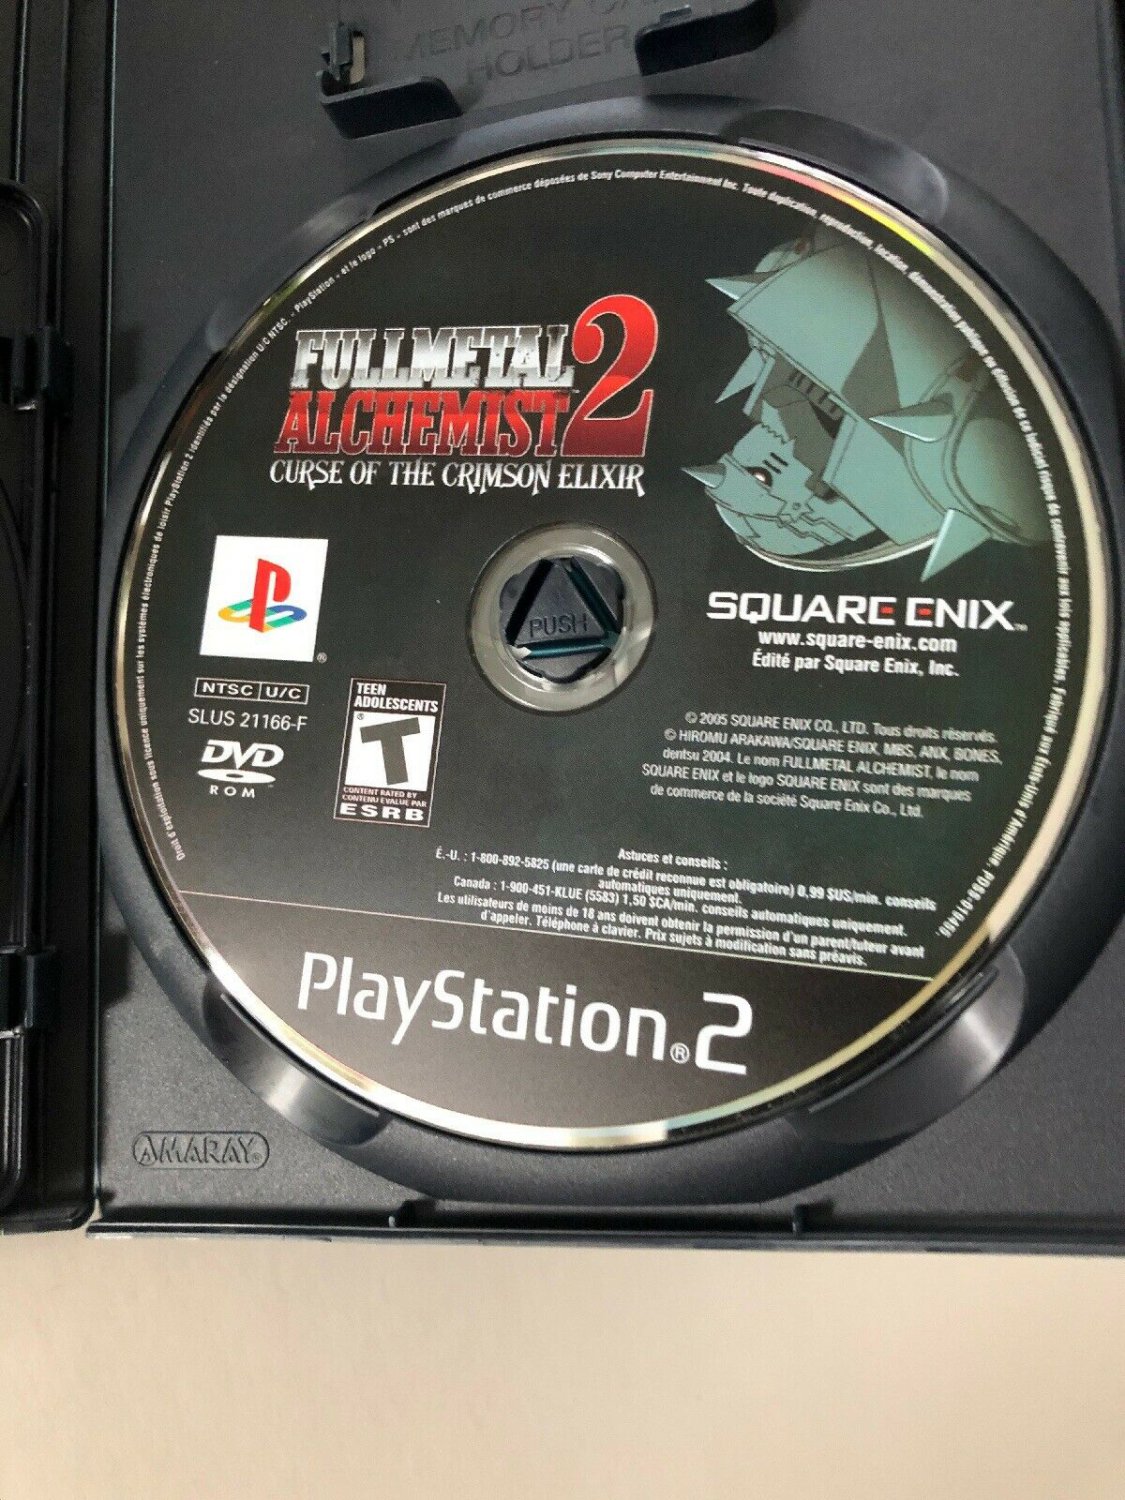 Fullmetal Alchemist 2 Curse of the Crimson Elixir (PS2) 2 disc set ...